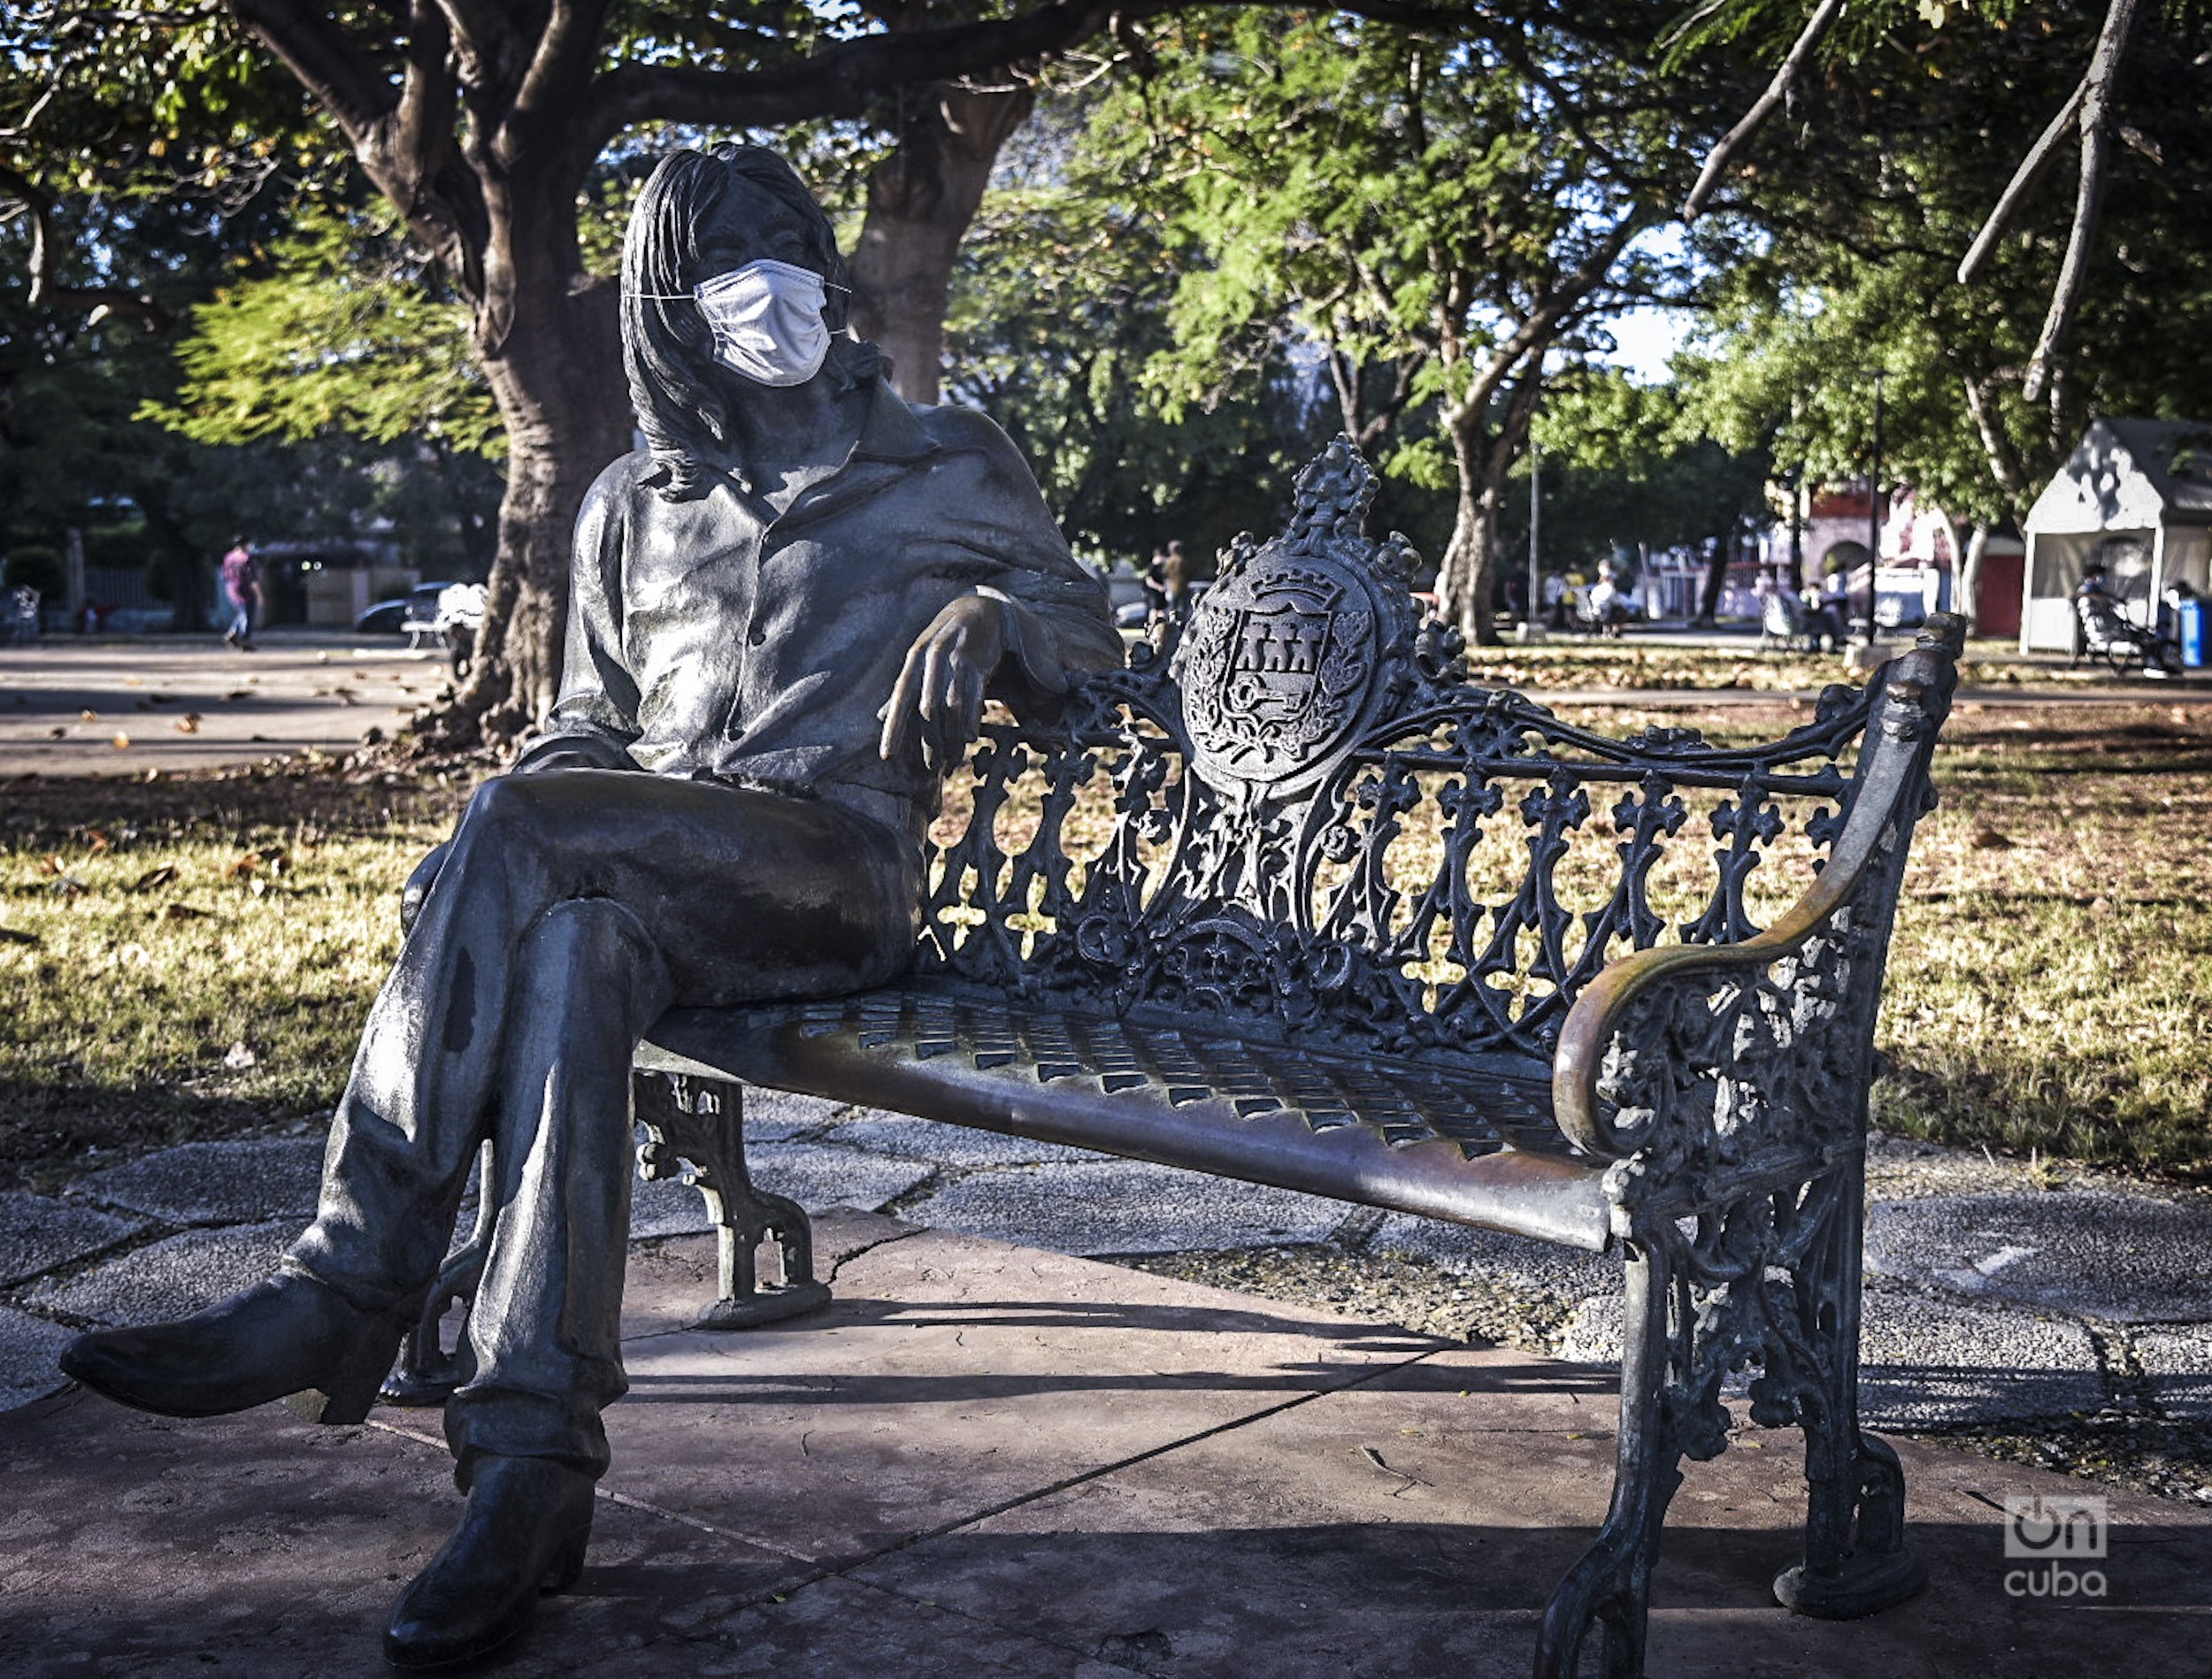 Escultura de John Lennon en un parque de La Habana, a la que le colocaron una mascarilla protectora contra la COVID-19. Foto: Kaloian.